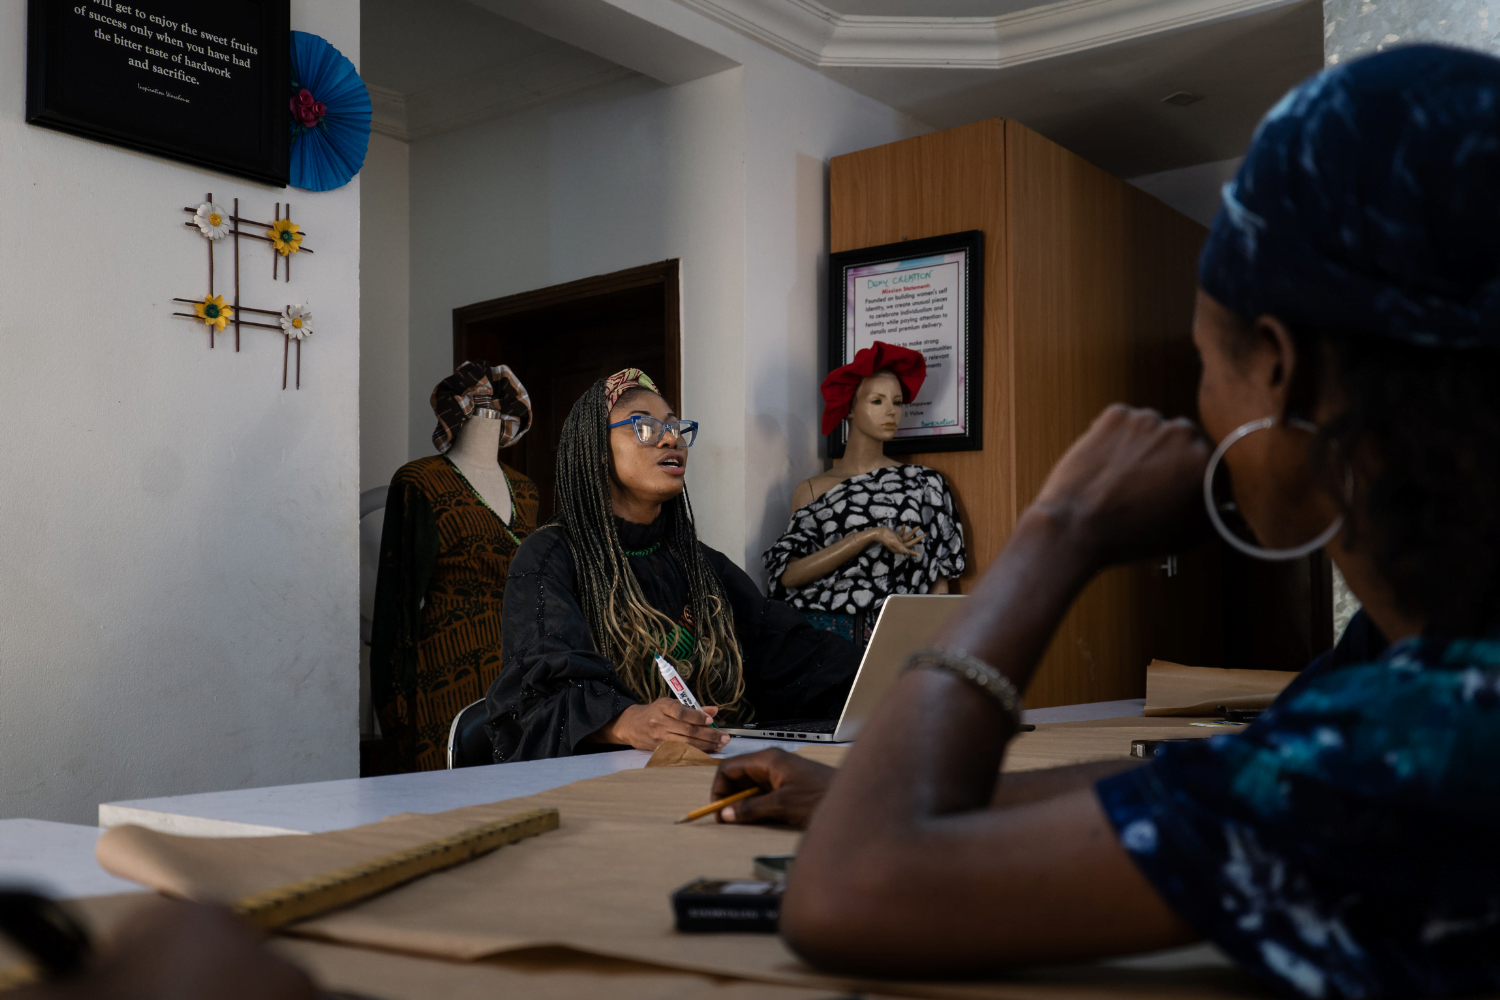 Adaeze Onu, Creative Director of Dexycreation in Nigeria, instructs women at her design academy.